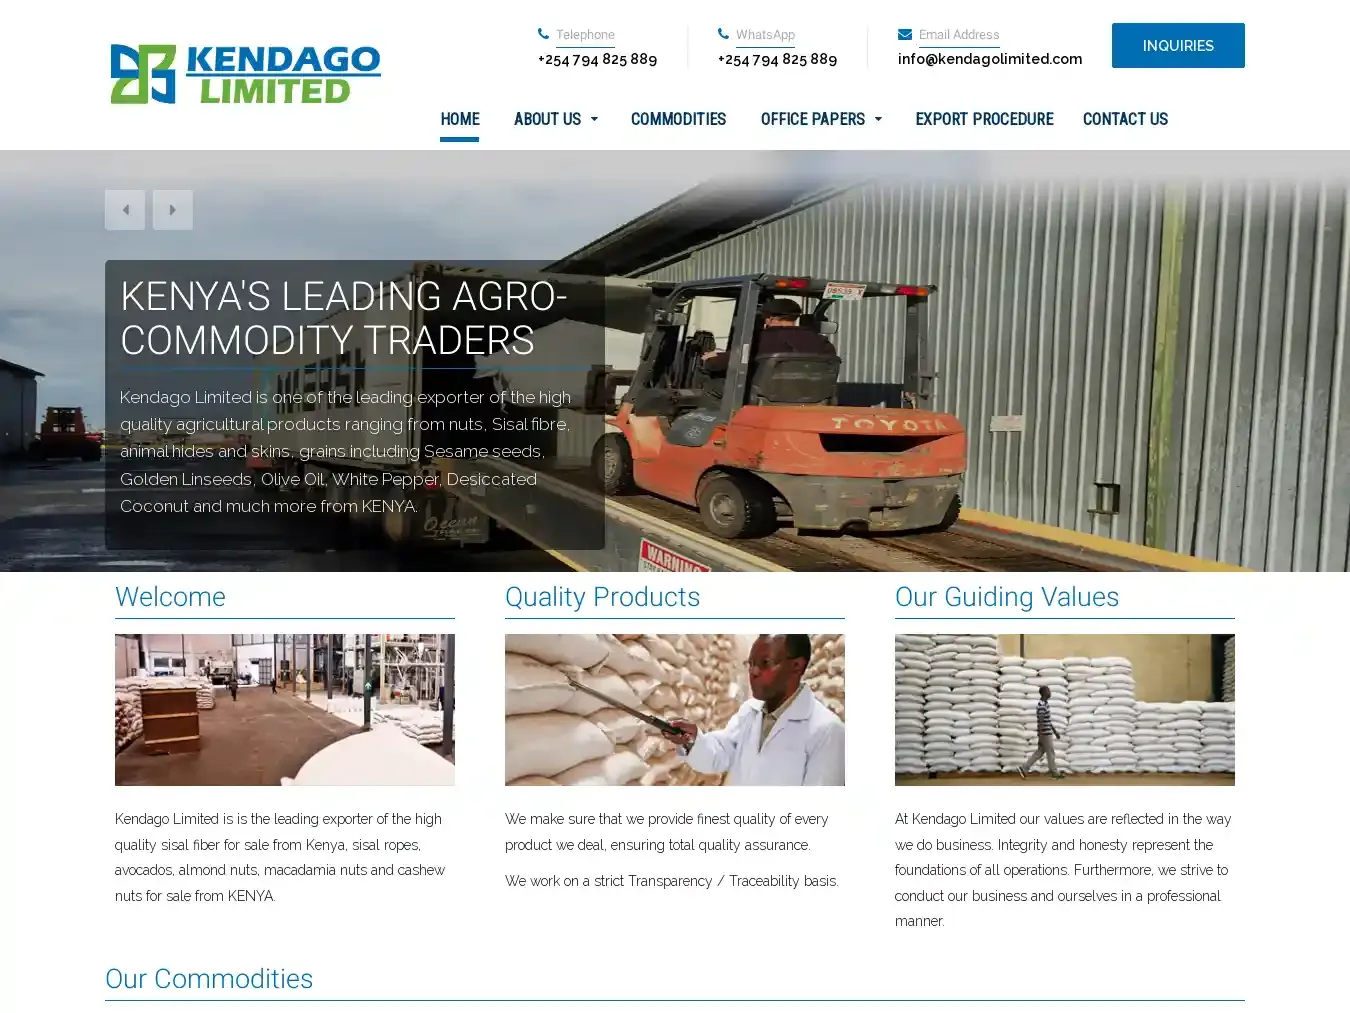 Kendagolimited.com Fraudulent Commodity website.